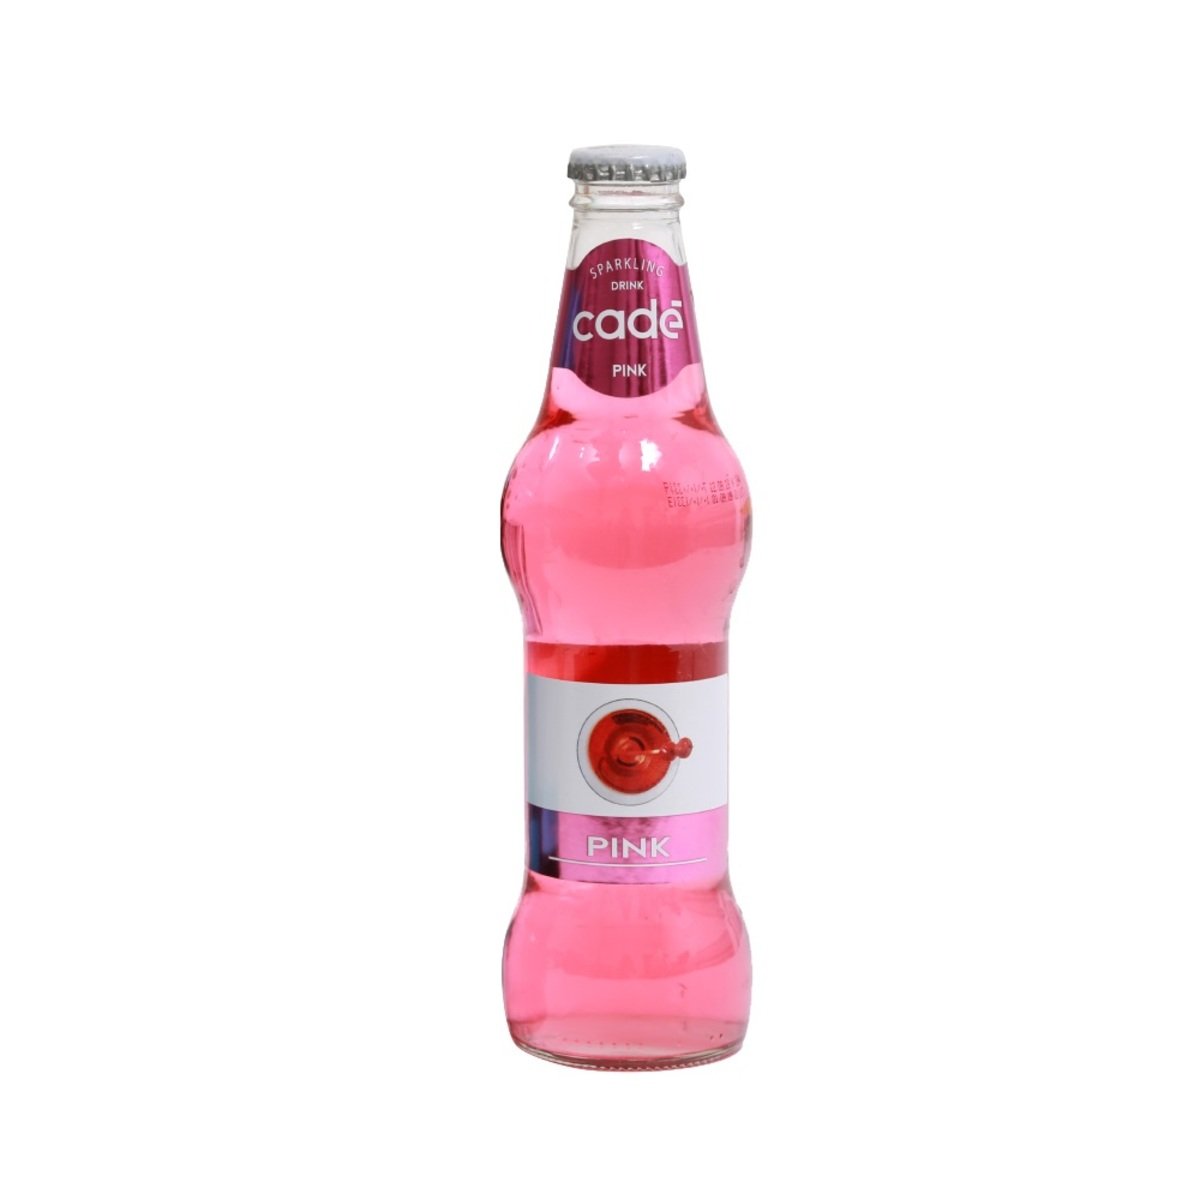 Cade Pink Sparkling Drink 300ml